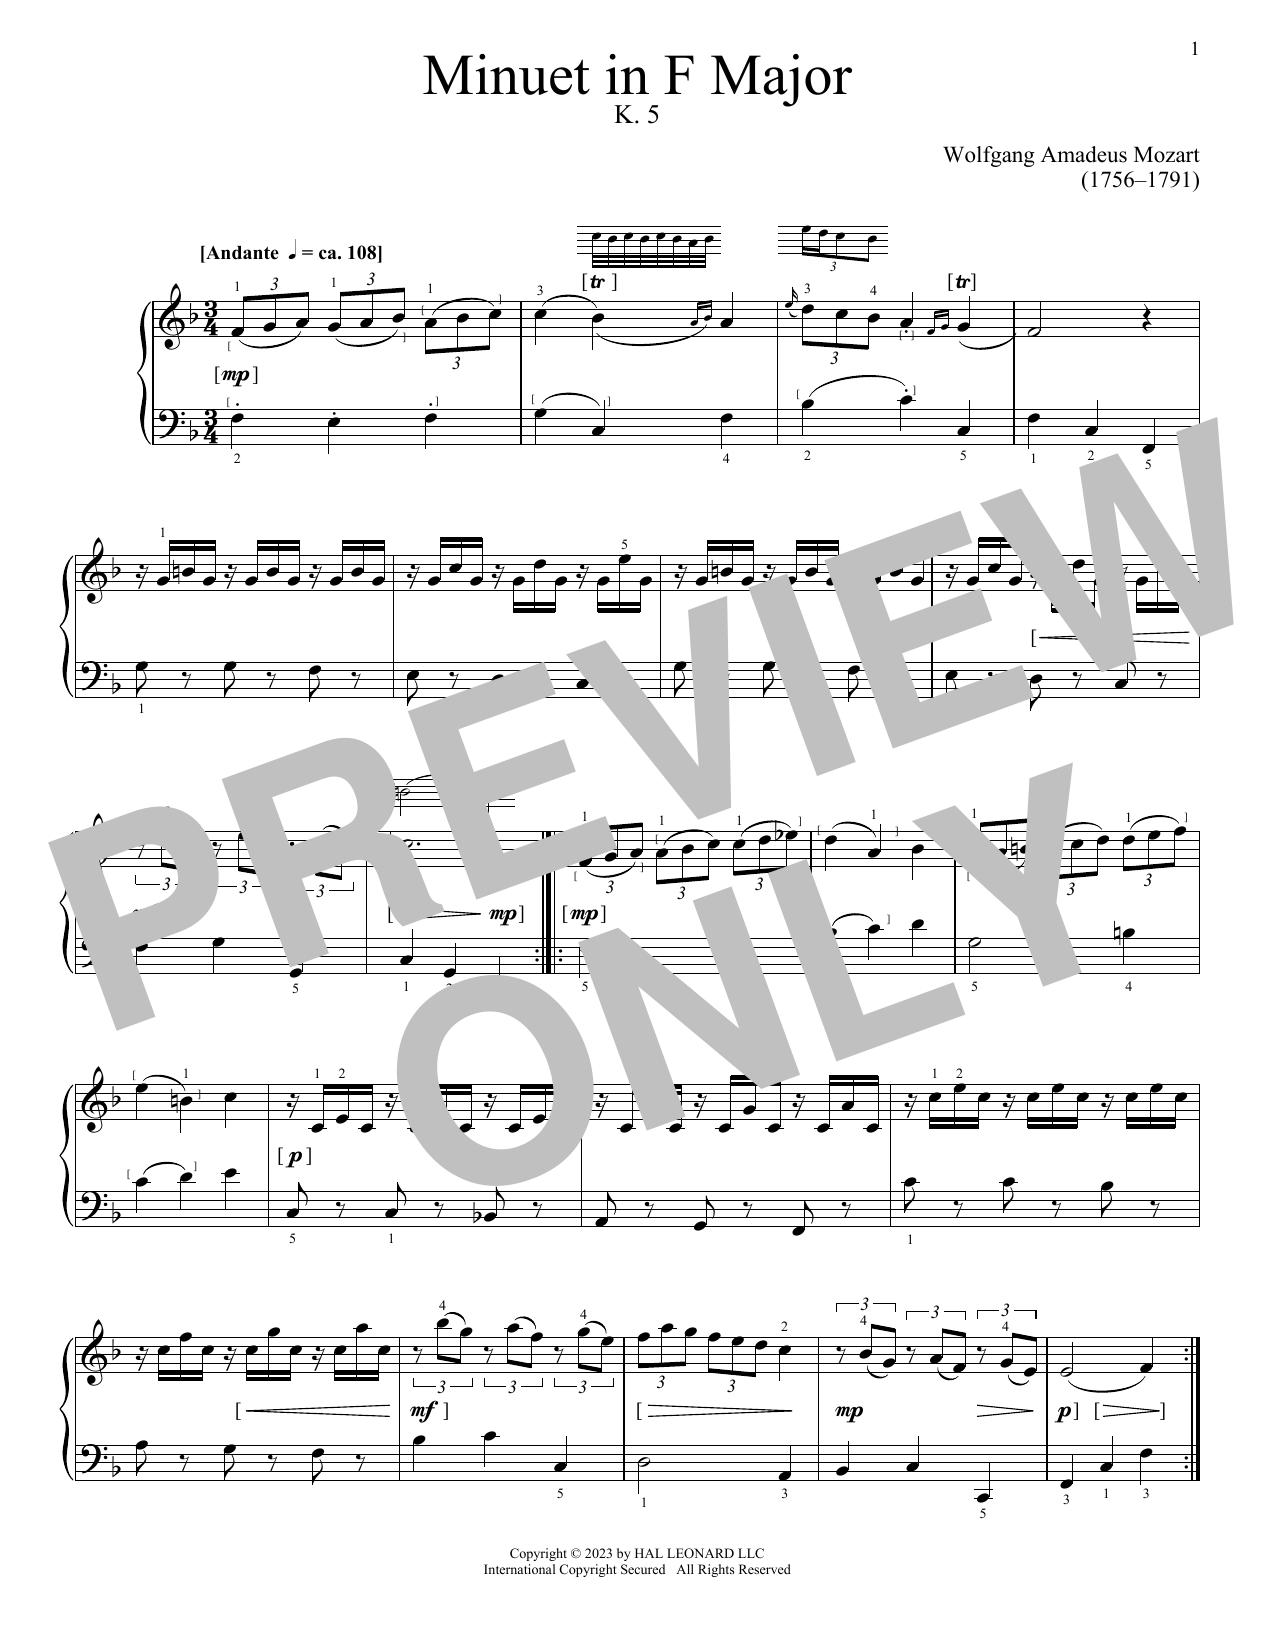 Wolfgang Amadeus Mozart Minuet In F Major sheet music notes printable PDF score